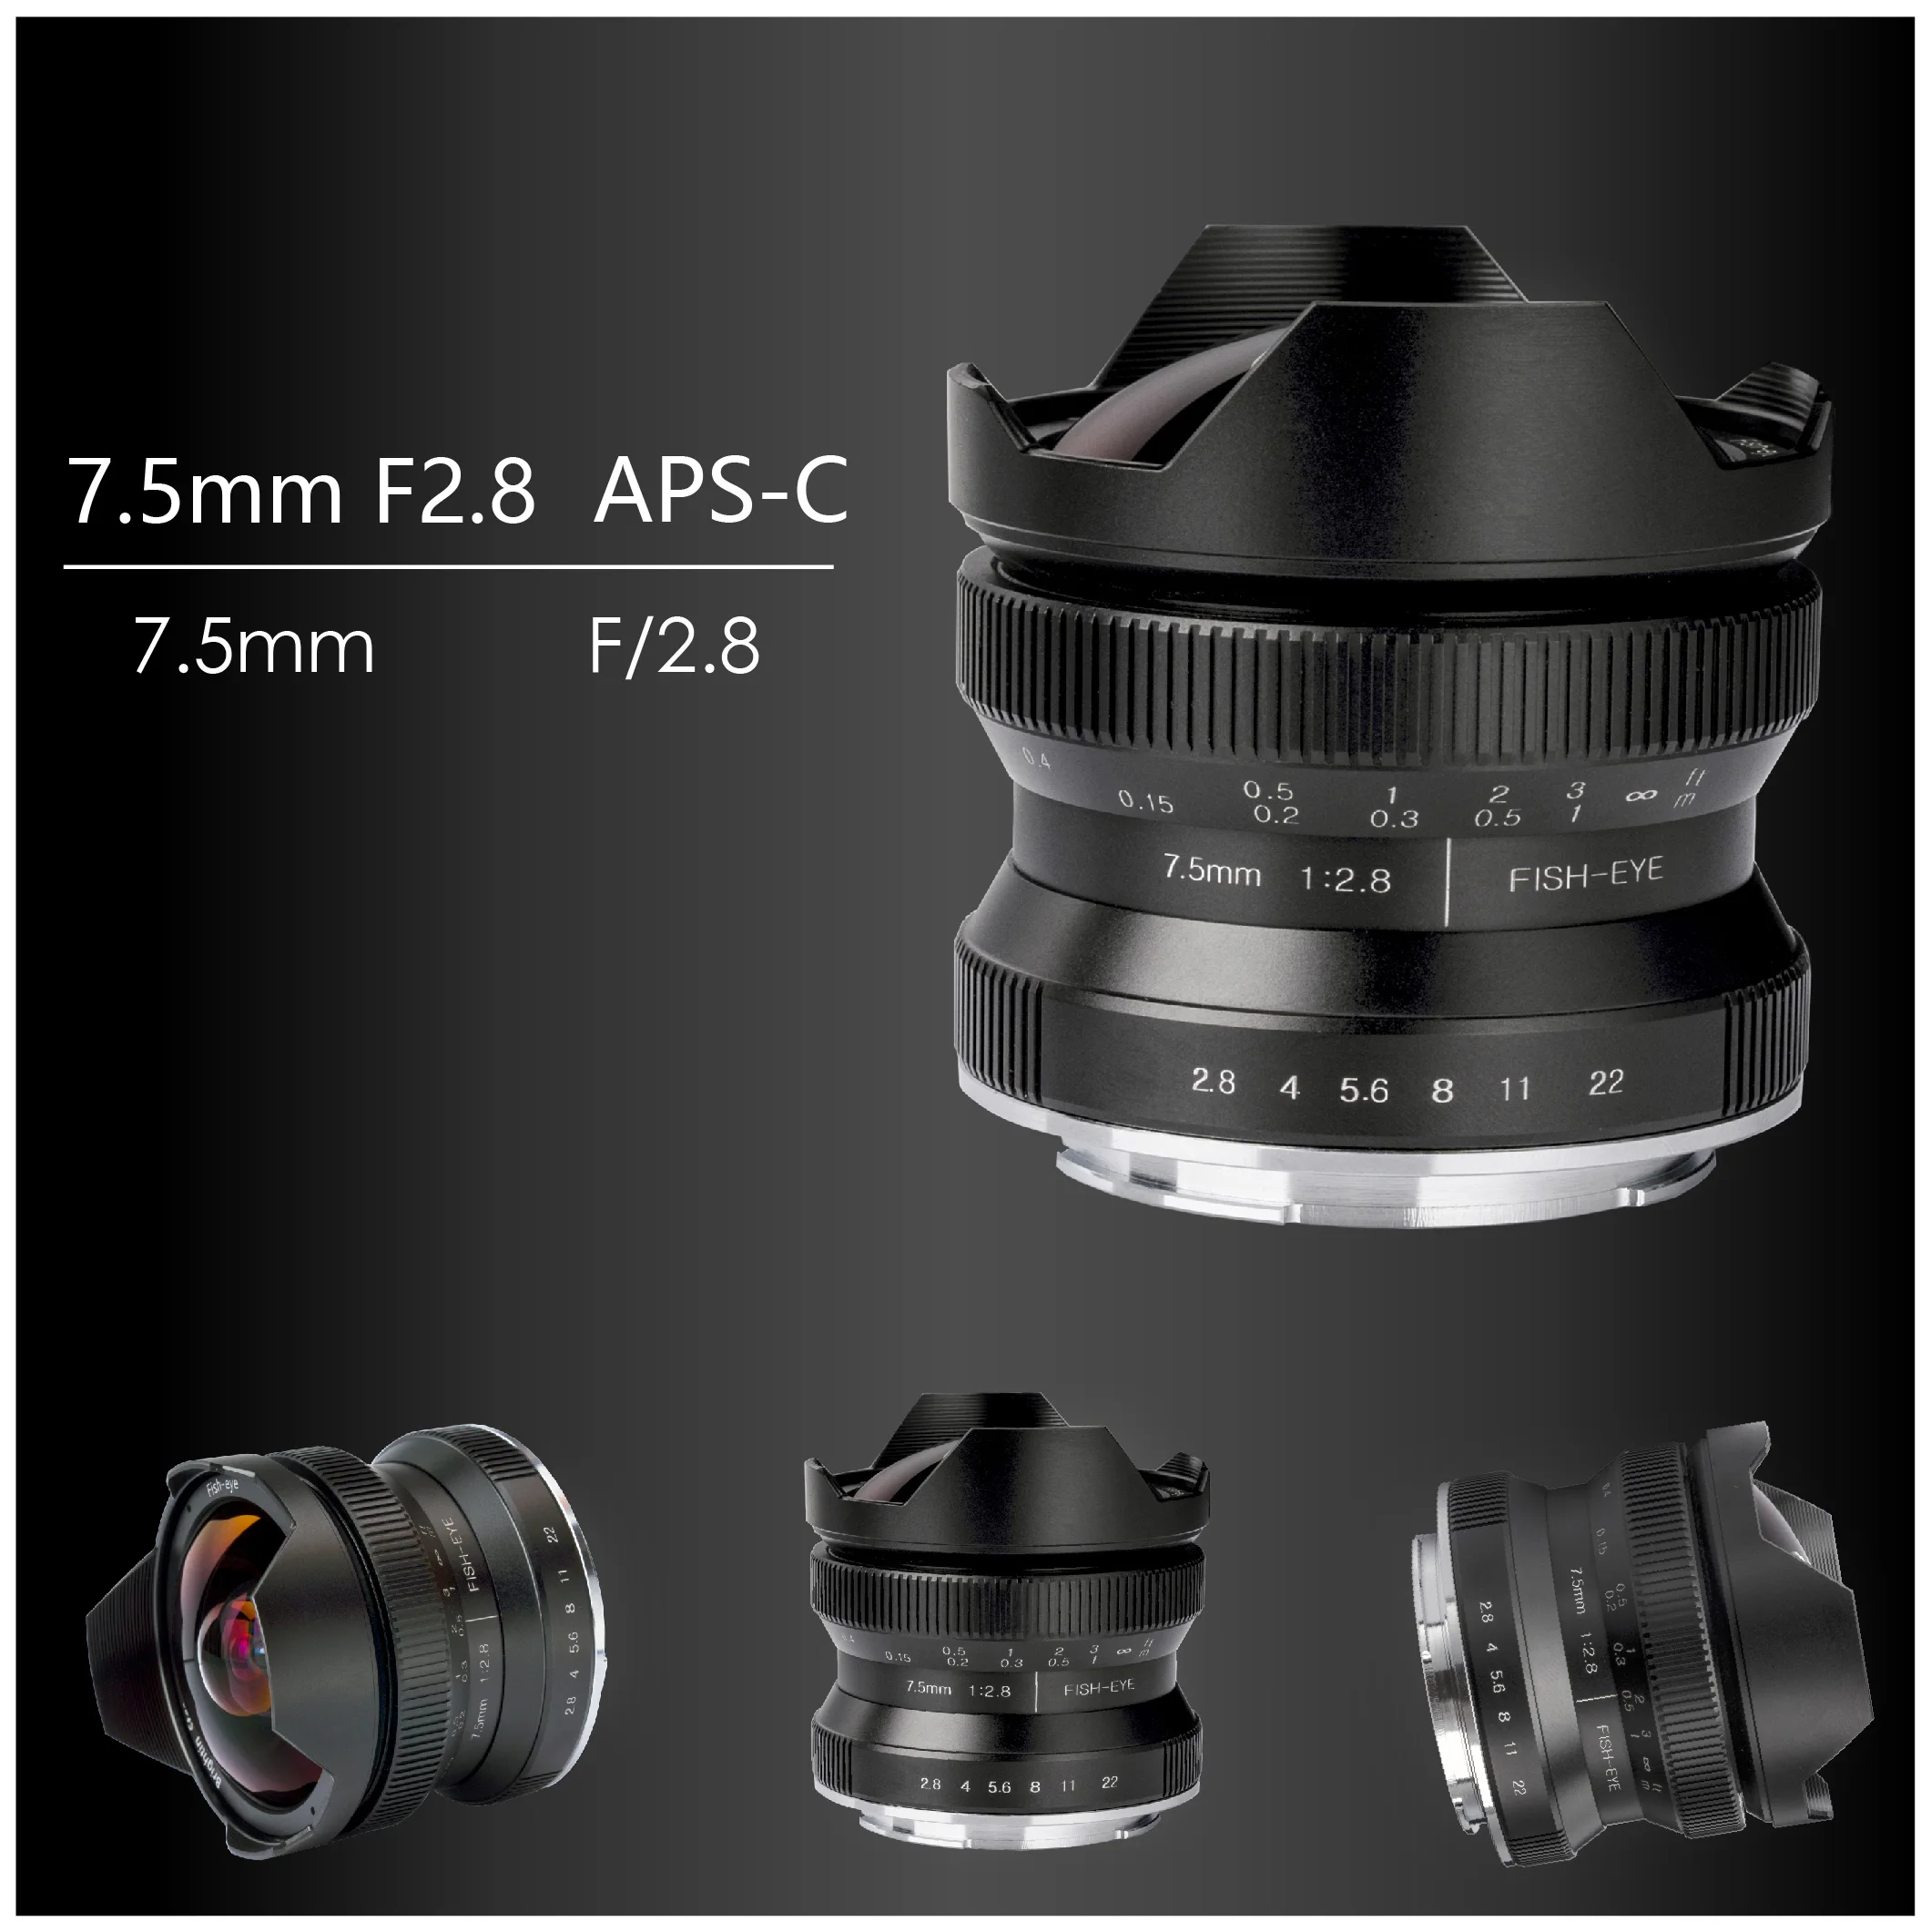 Brightin-Star 7.5mm F2.8 Ultra Wide-Angle Fisheye Manual Focus APS-C Mirrorless Camera Lens for Micro 4/3-Mount Panasonic G9/GX85/GH5/GM7 5/GX9 8/GF10 5/Olympus EPM2/E-P 5 3/E-M10/E-PL10 